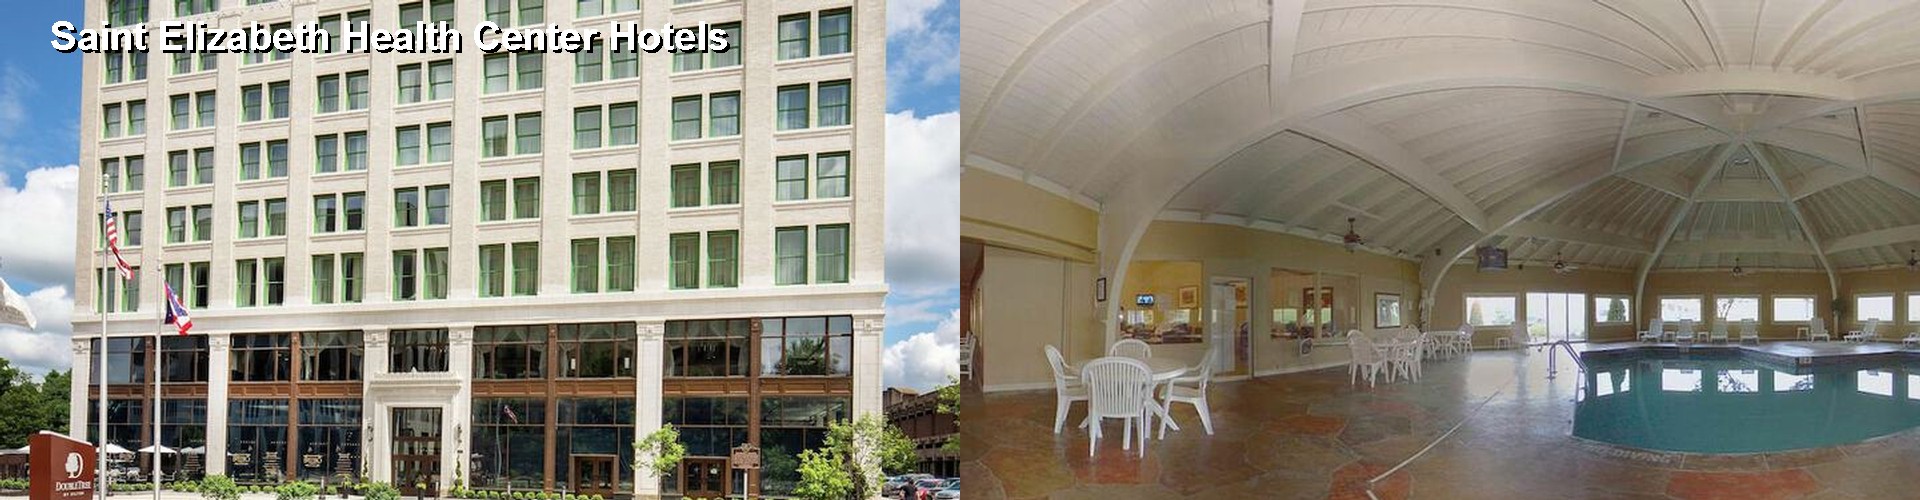 5 Best Hotels near Saint Elizabeth Health Center